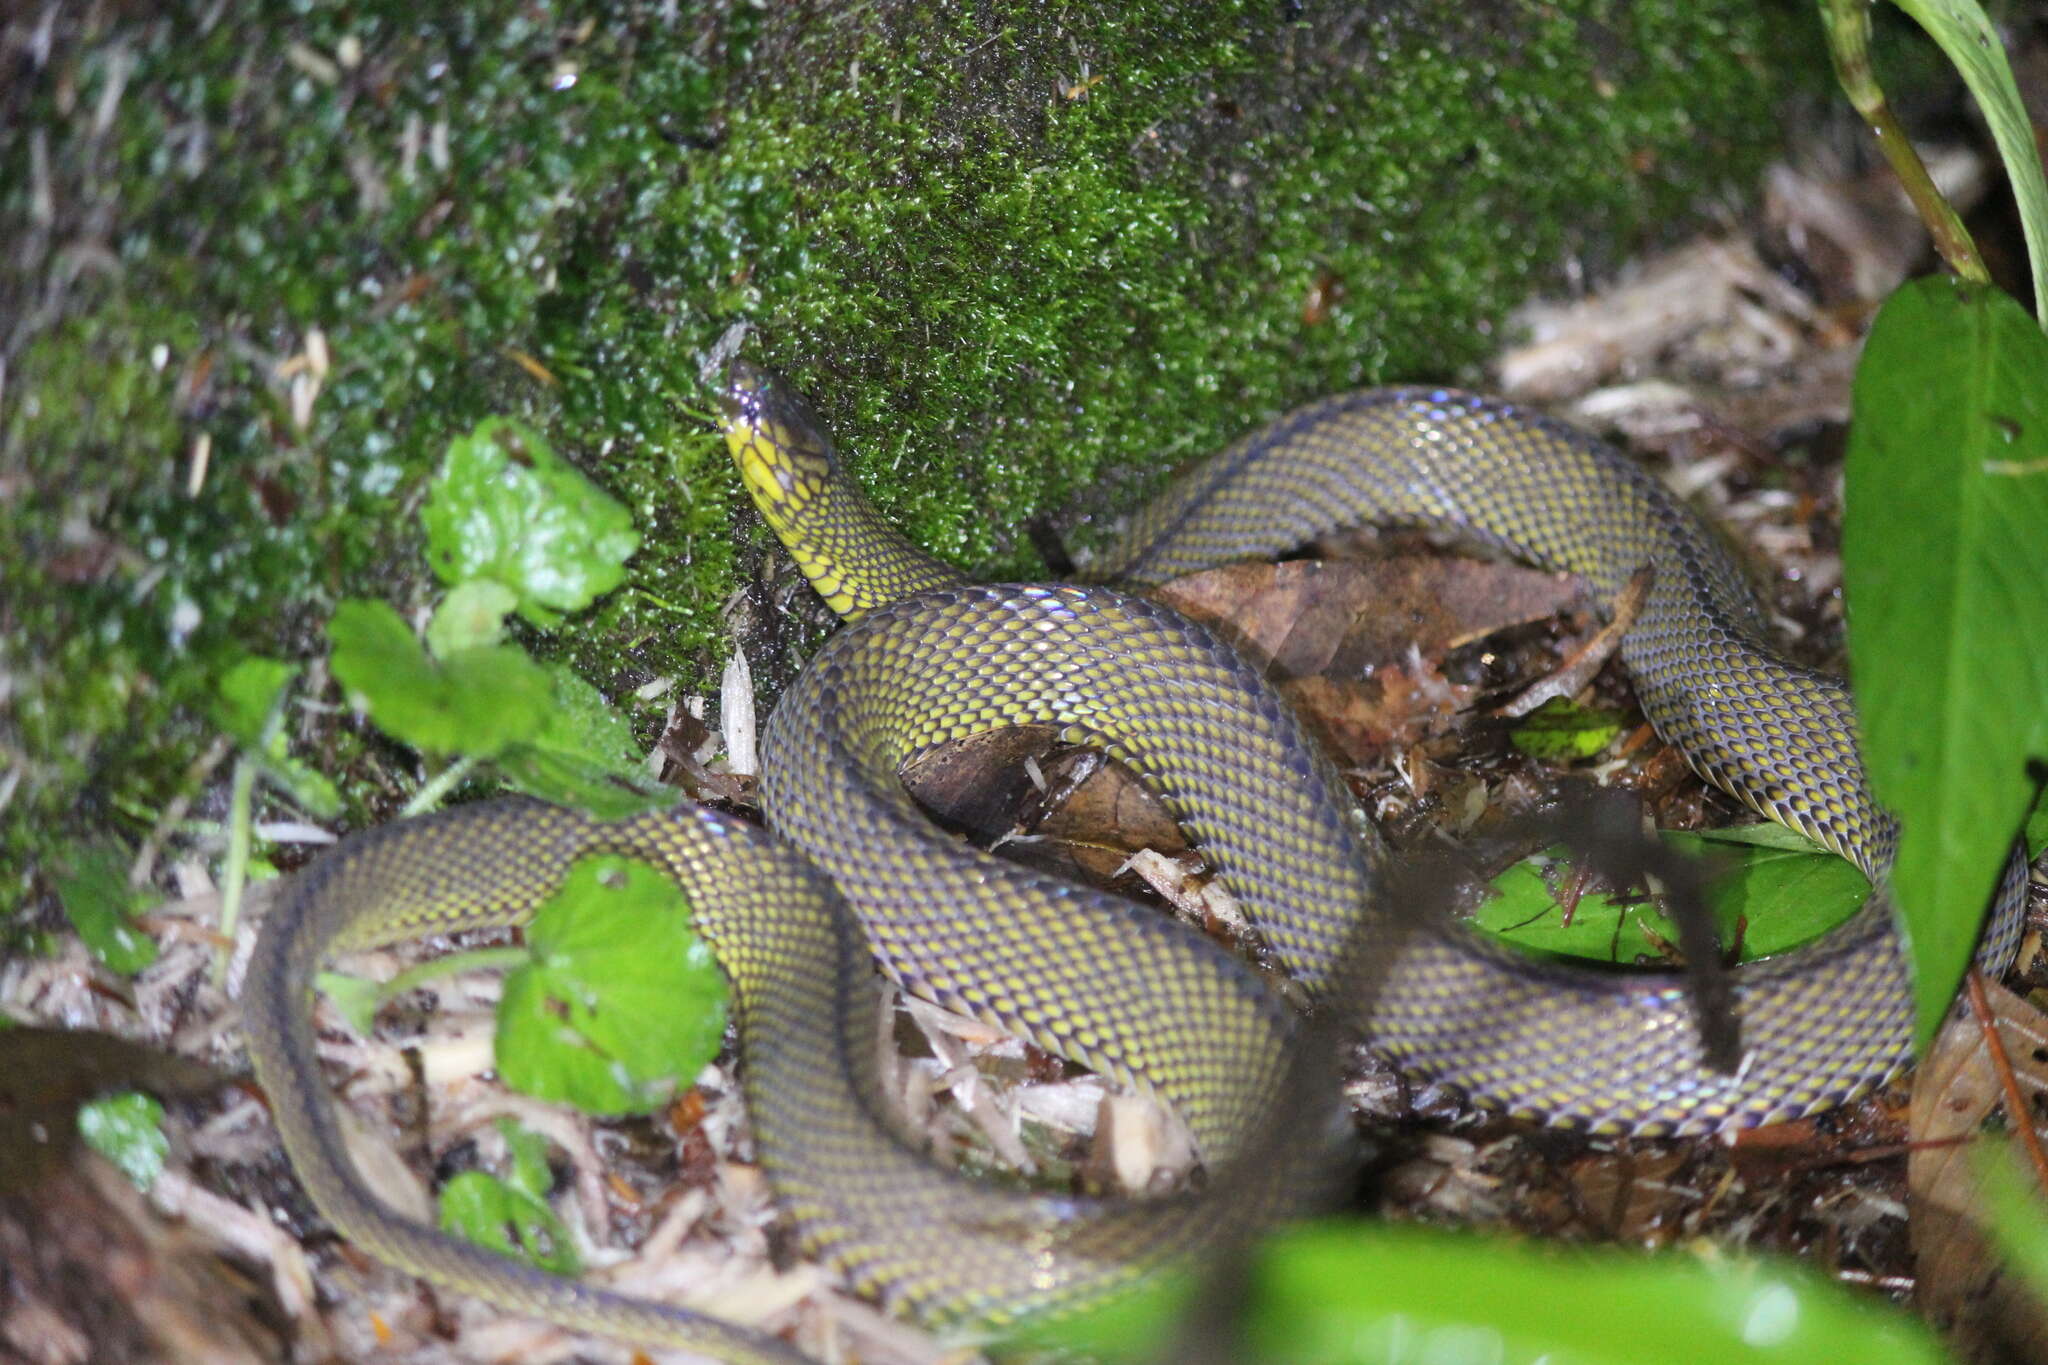 Image of Black Odd-scaled Snake